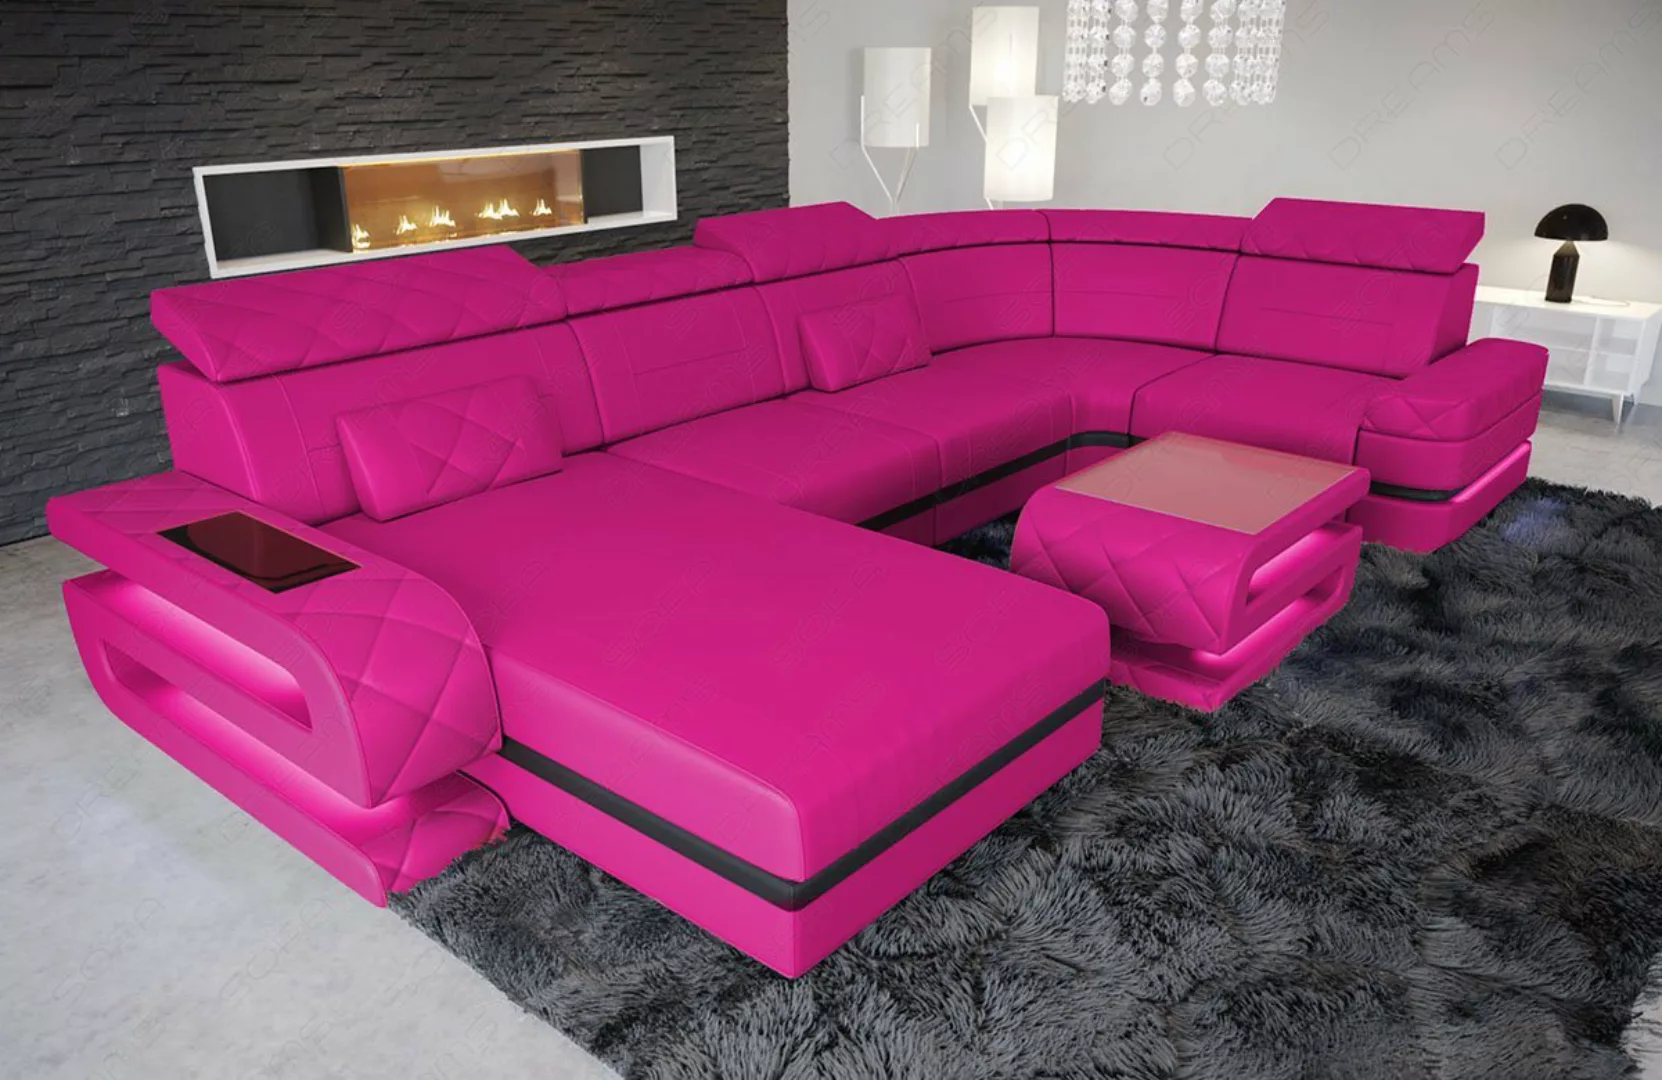 Sofa Dreams Wohnlandschaft Sofa Leder Bologna U Form Ledersofa, Couch, mit günstig online kaufen